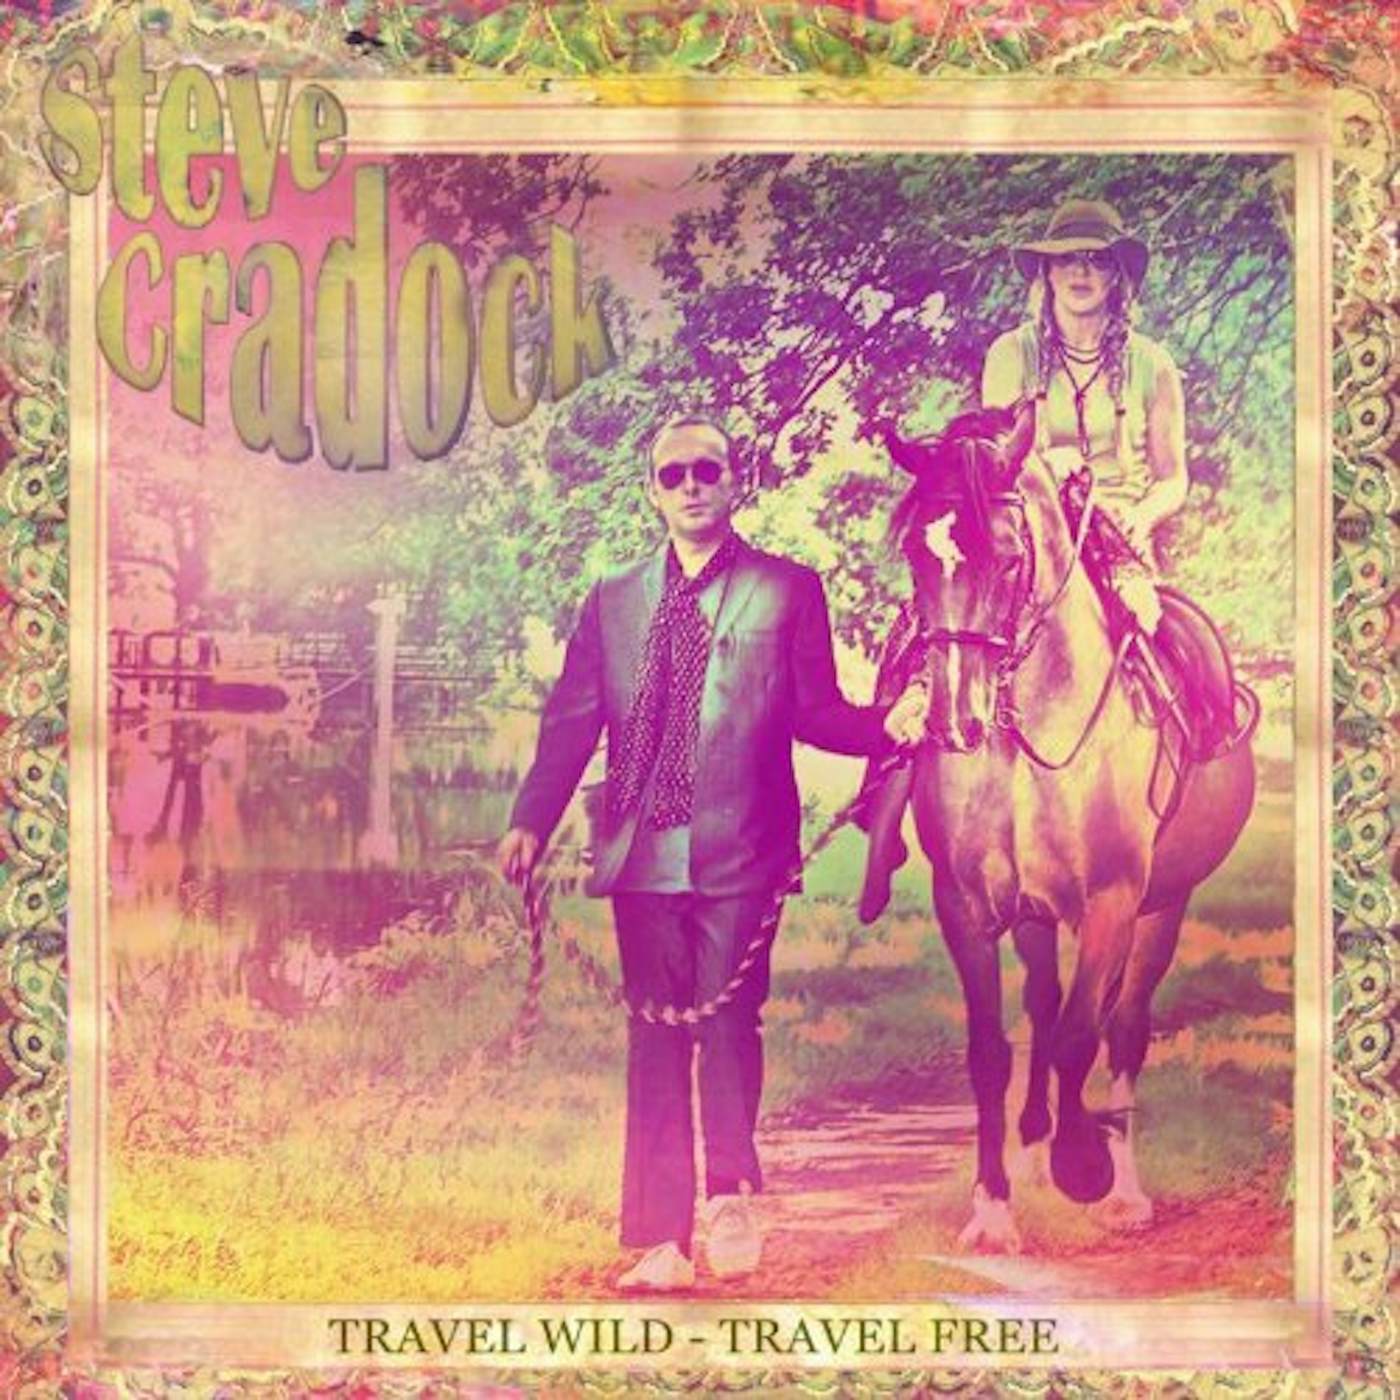 Steve Cradock Travel Wild - Travel Free Vinyl Record